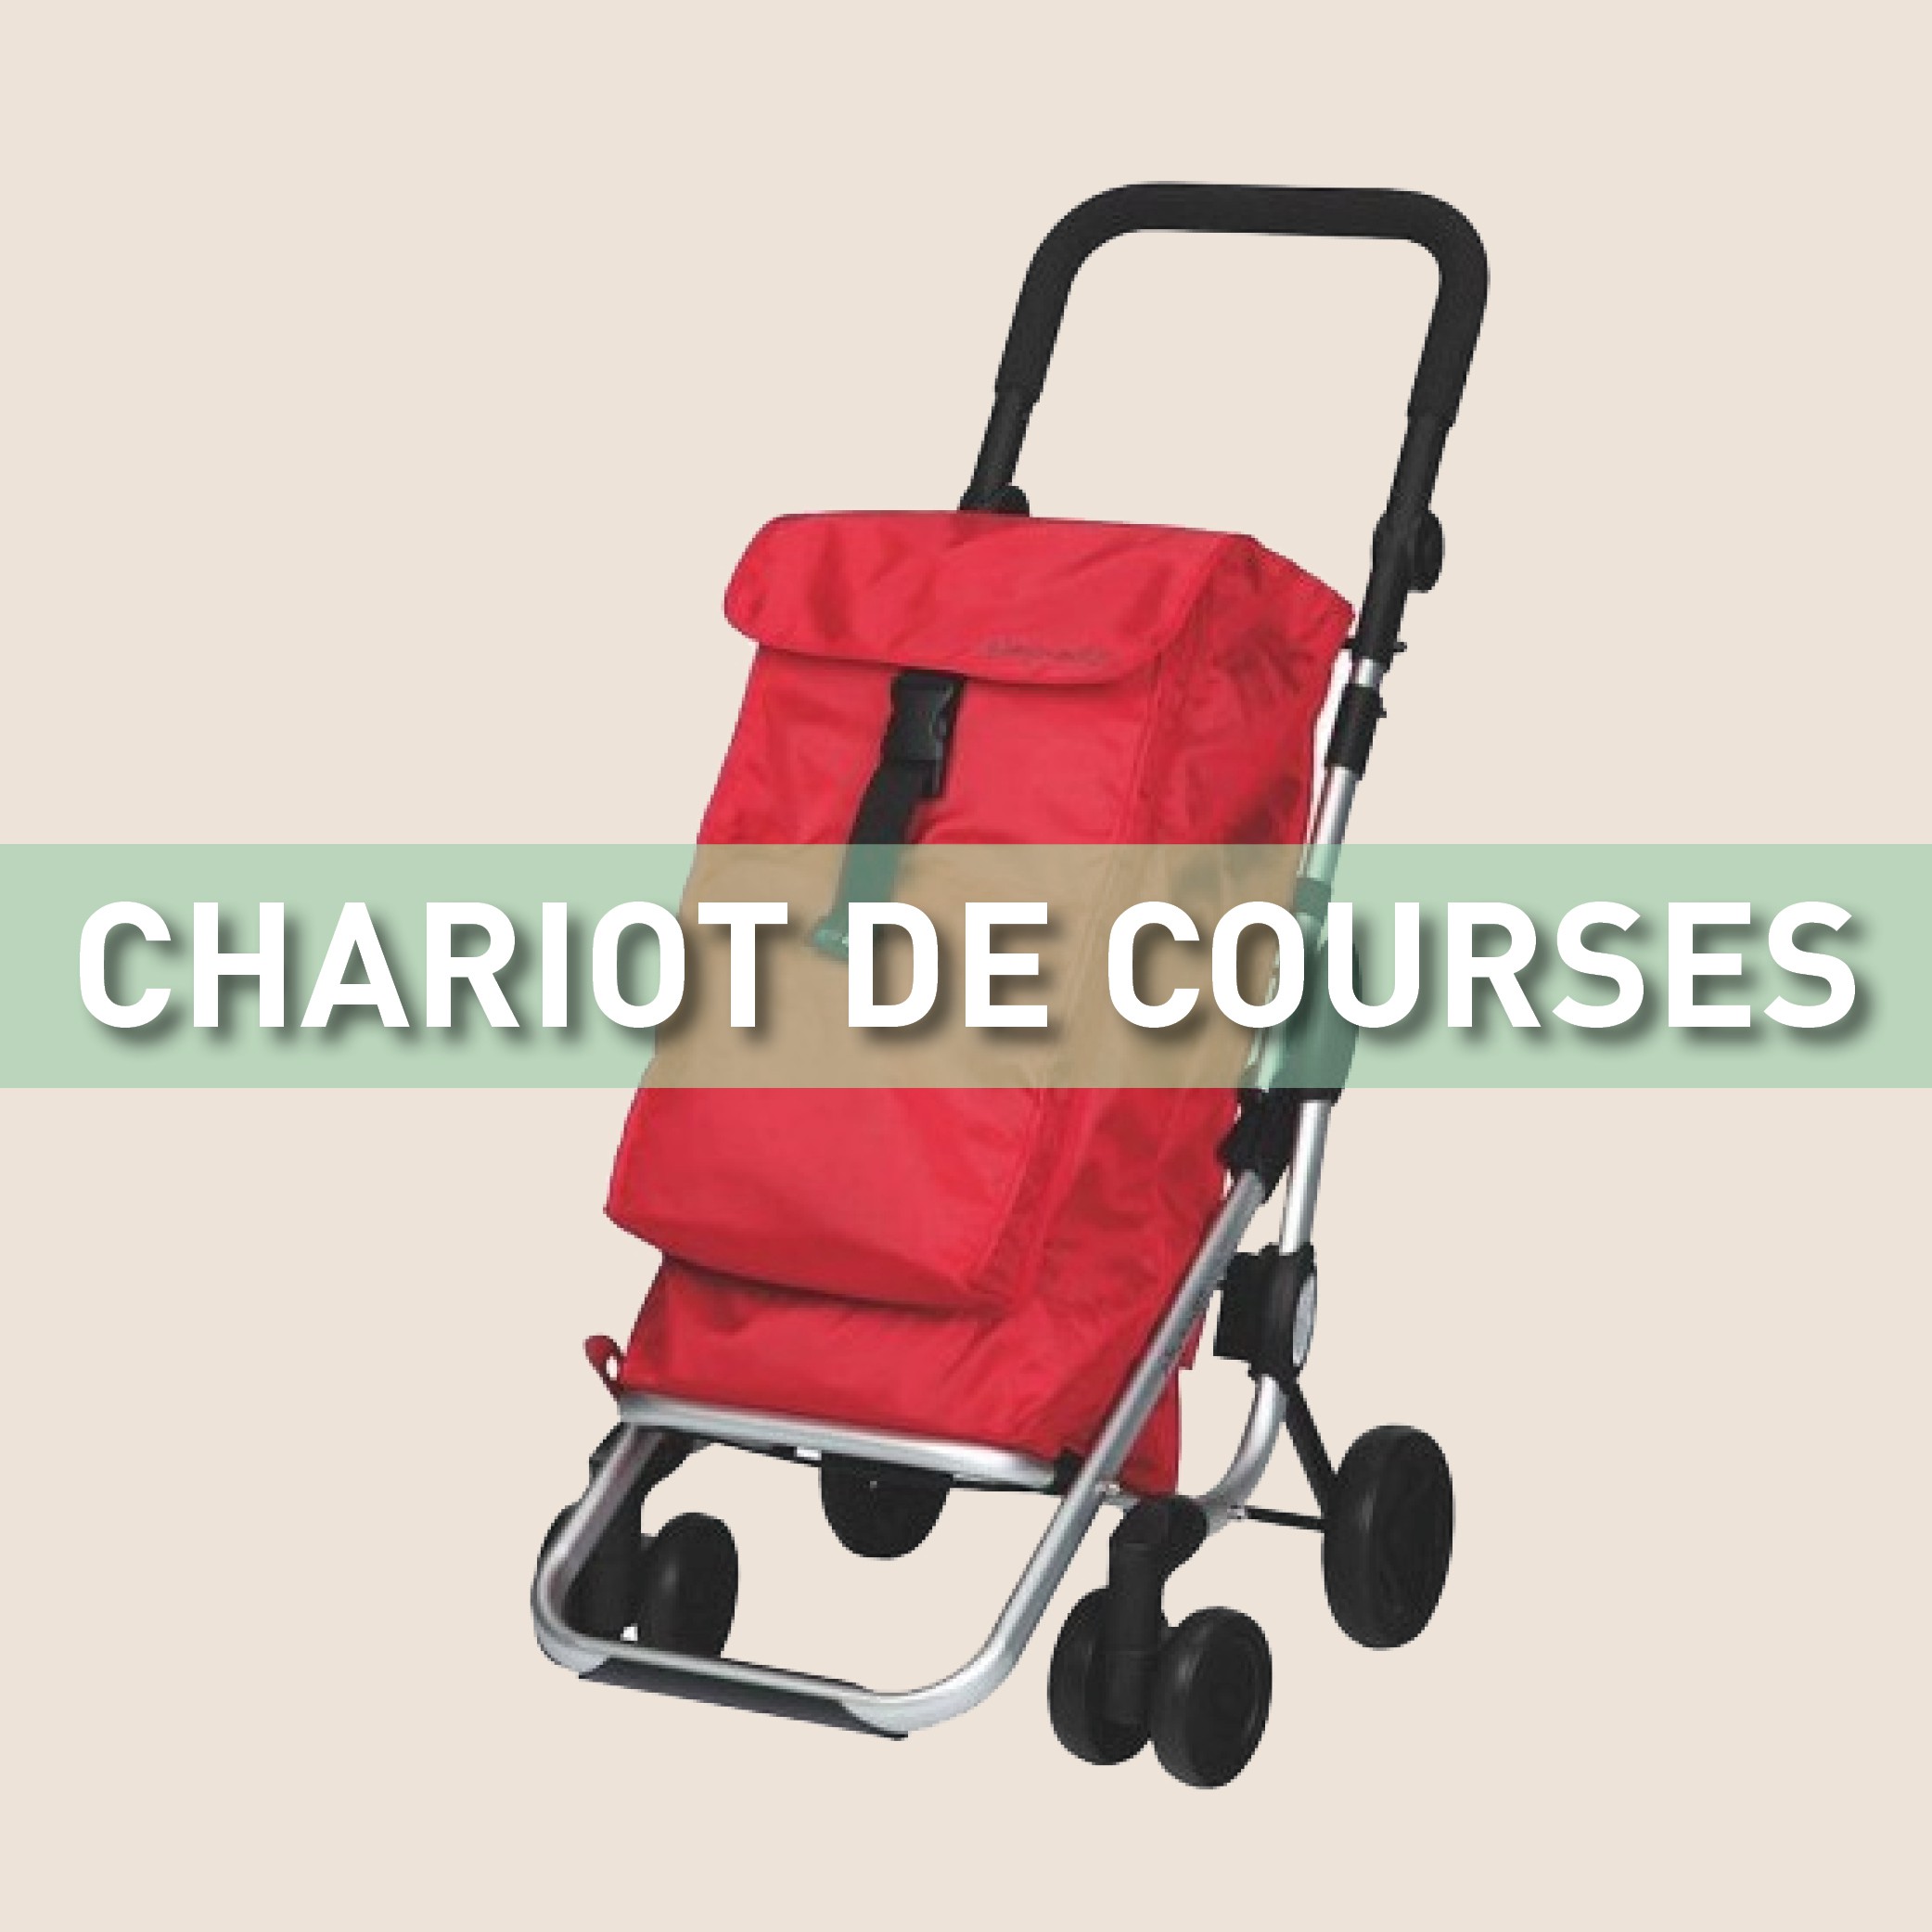 Chariot de courses